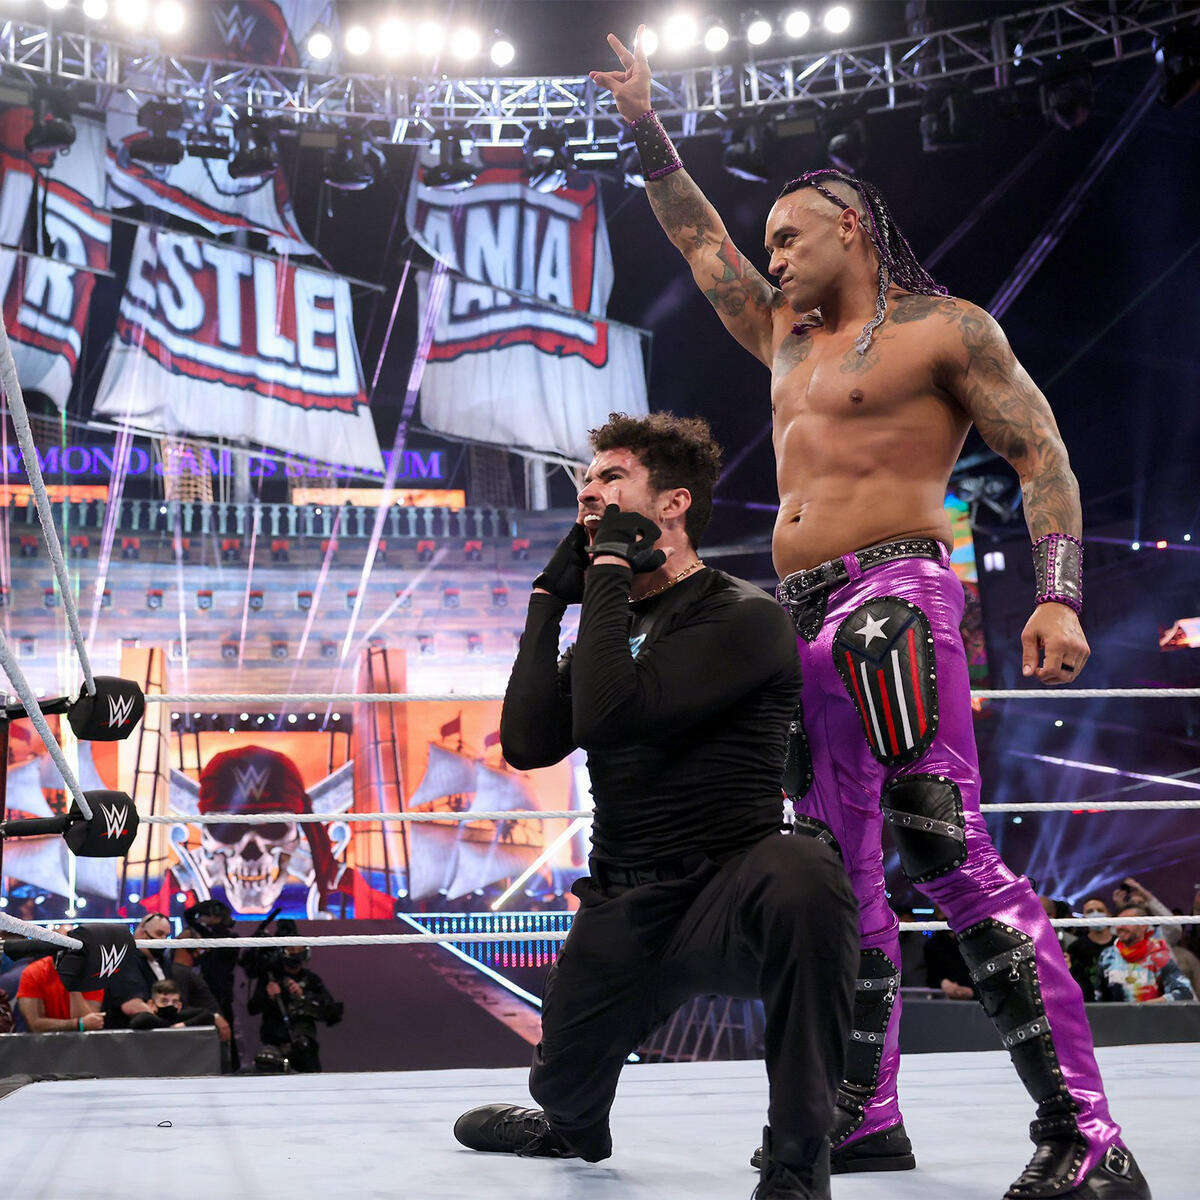 Tampa Bay wrestlers dominate WrestleMania men's world heavyweight